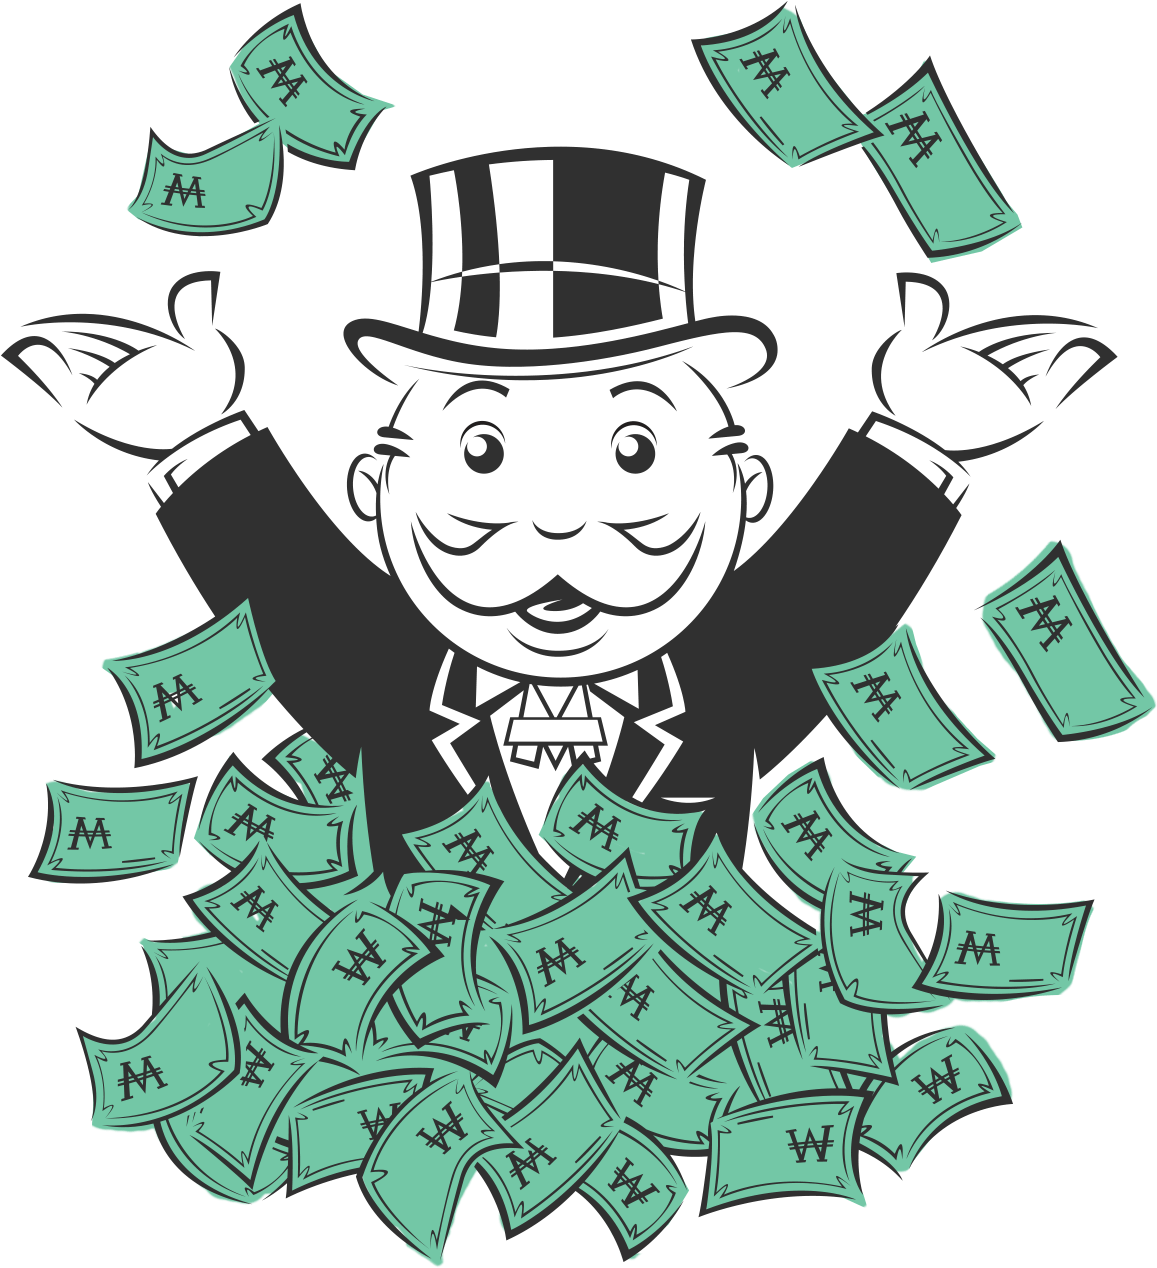 1947128 - Monopoly Man With Money (1166x1273)